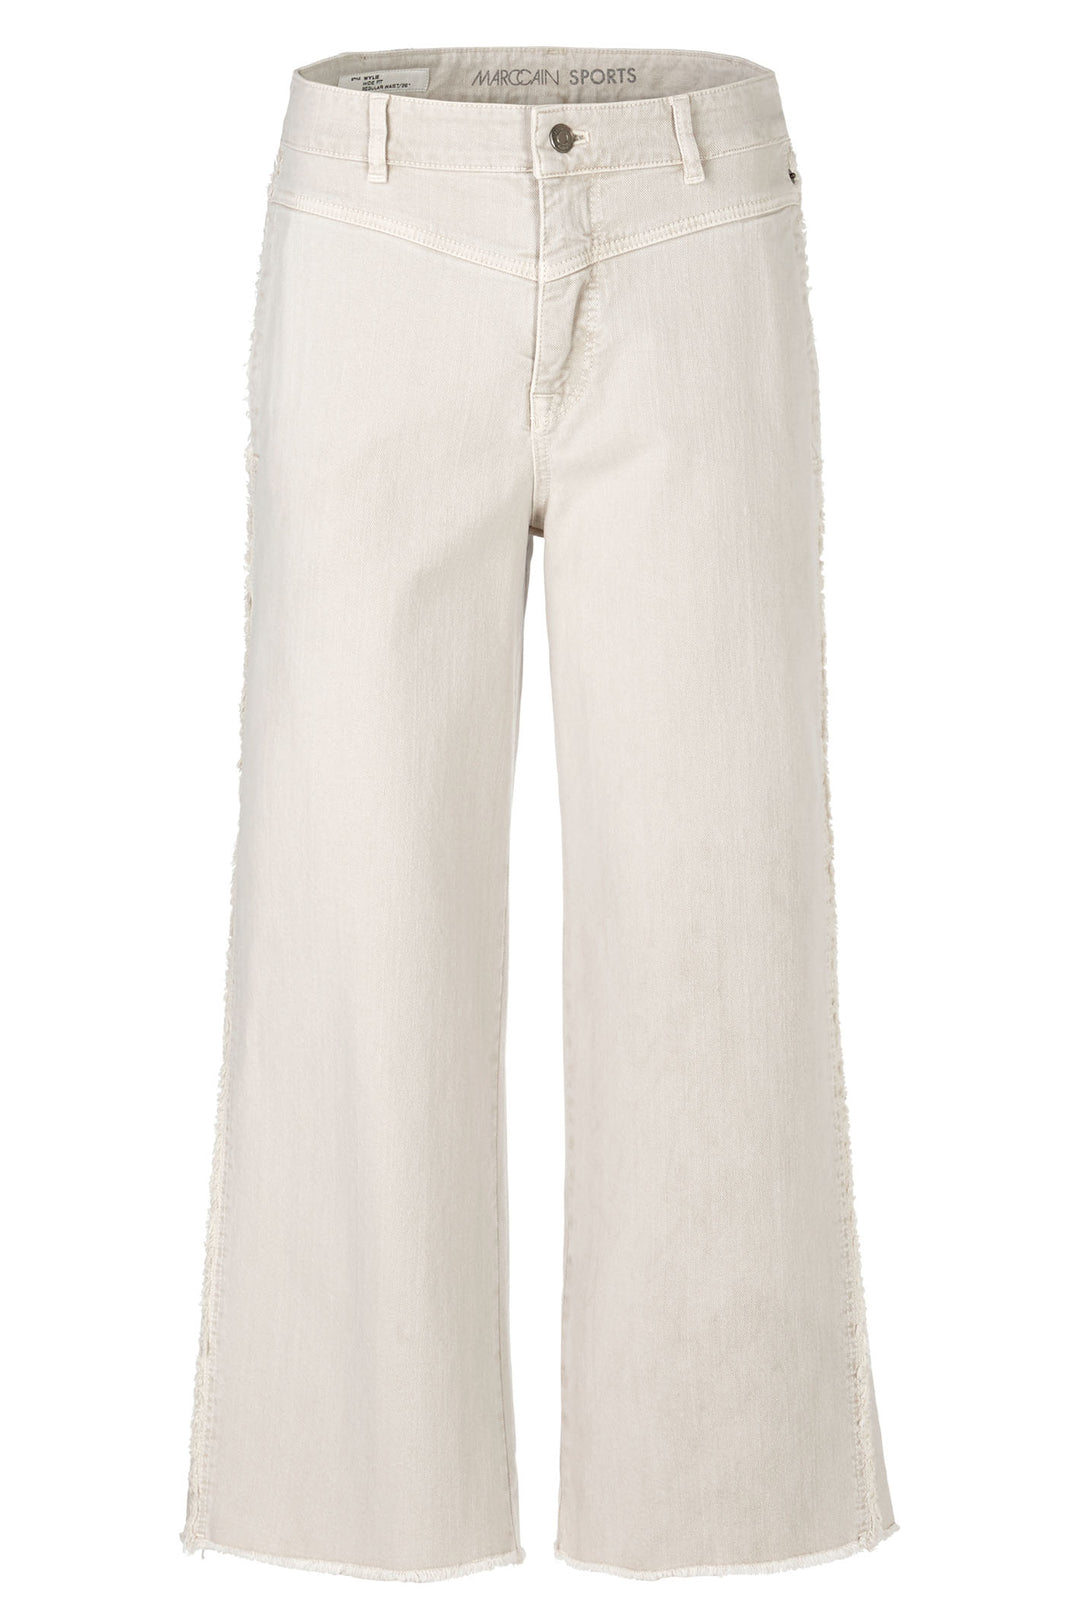 Marc Cain Sports WS 82.10 D02 117 Beige Soft Moon Rock Wylie Jeans - Olivia Grace Fashion